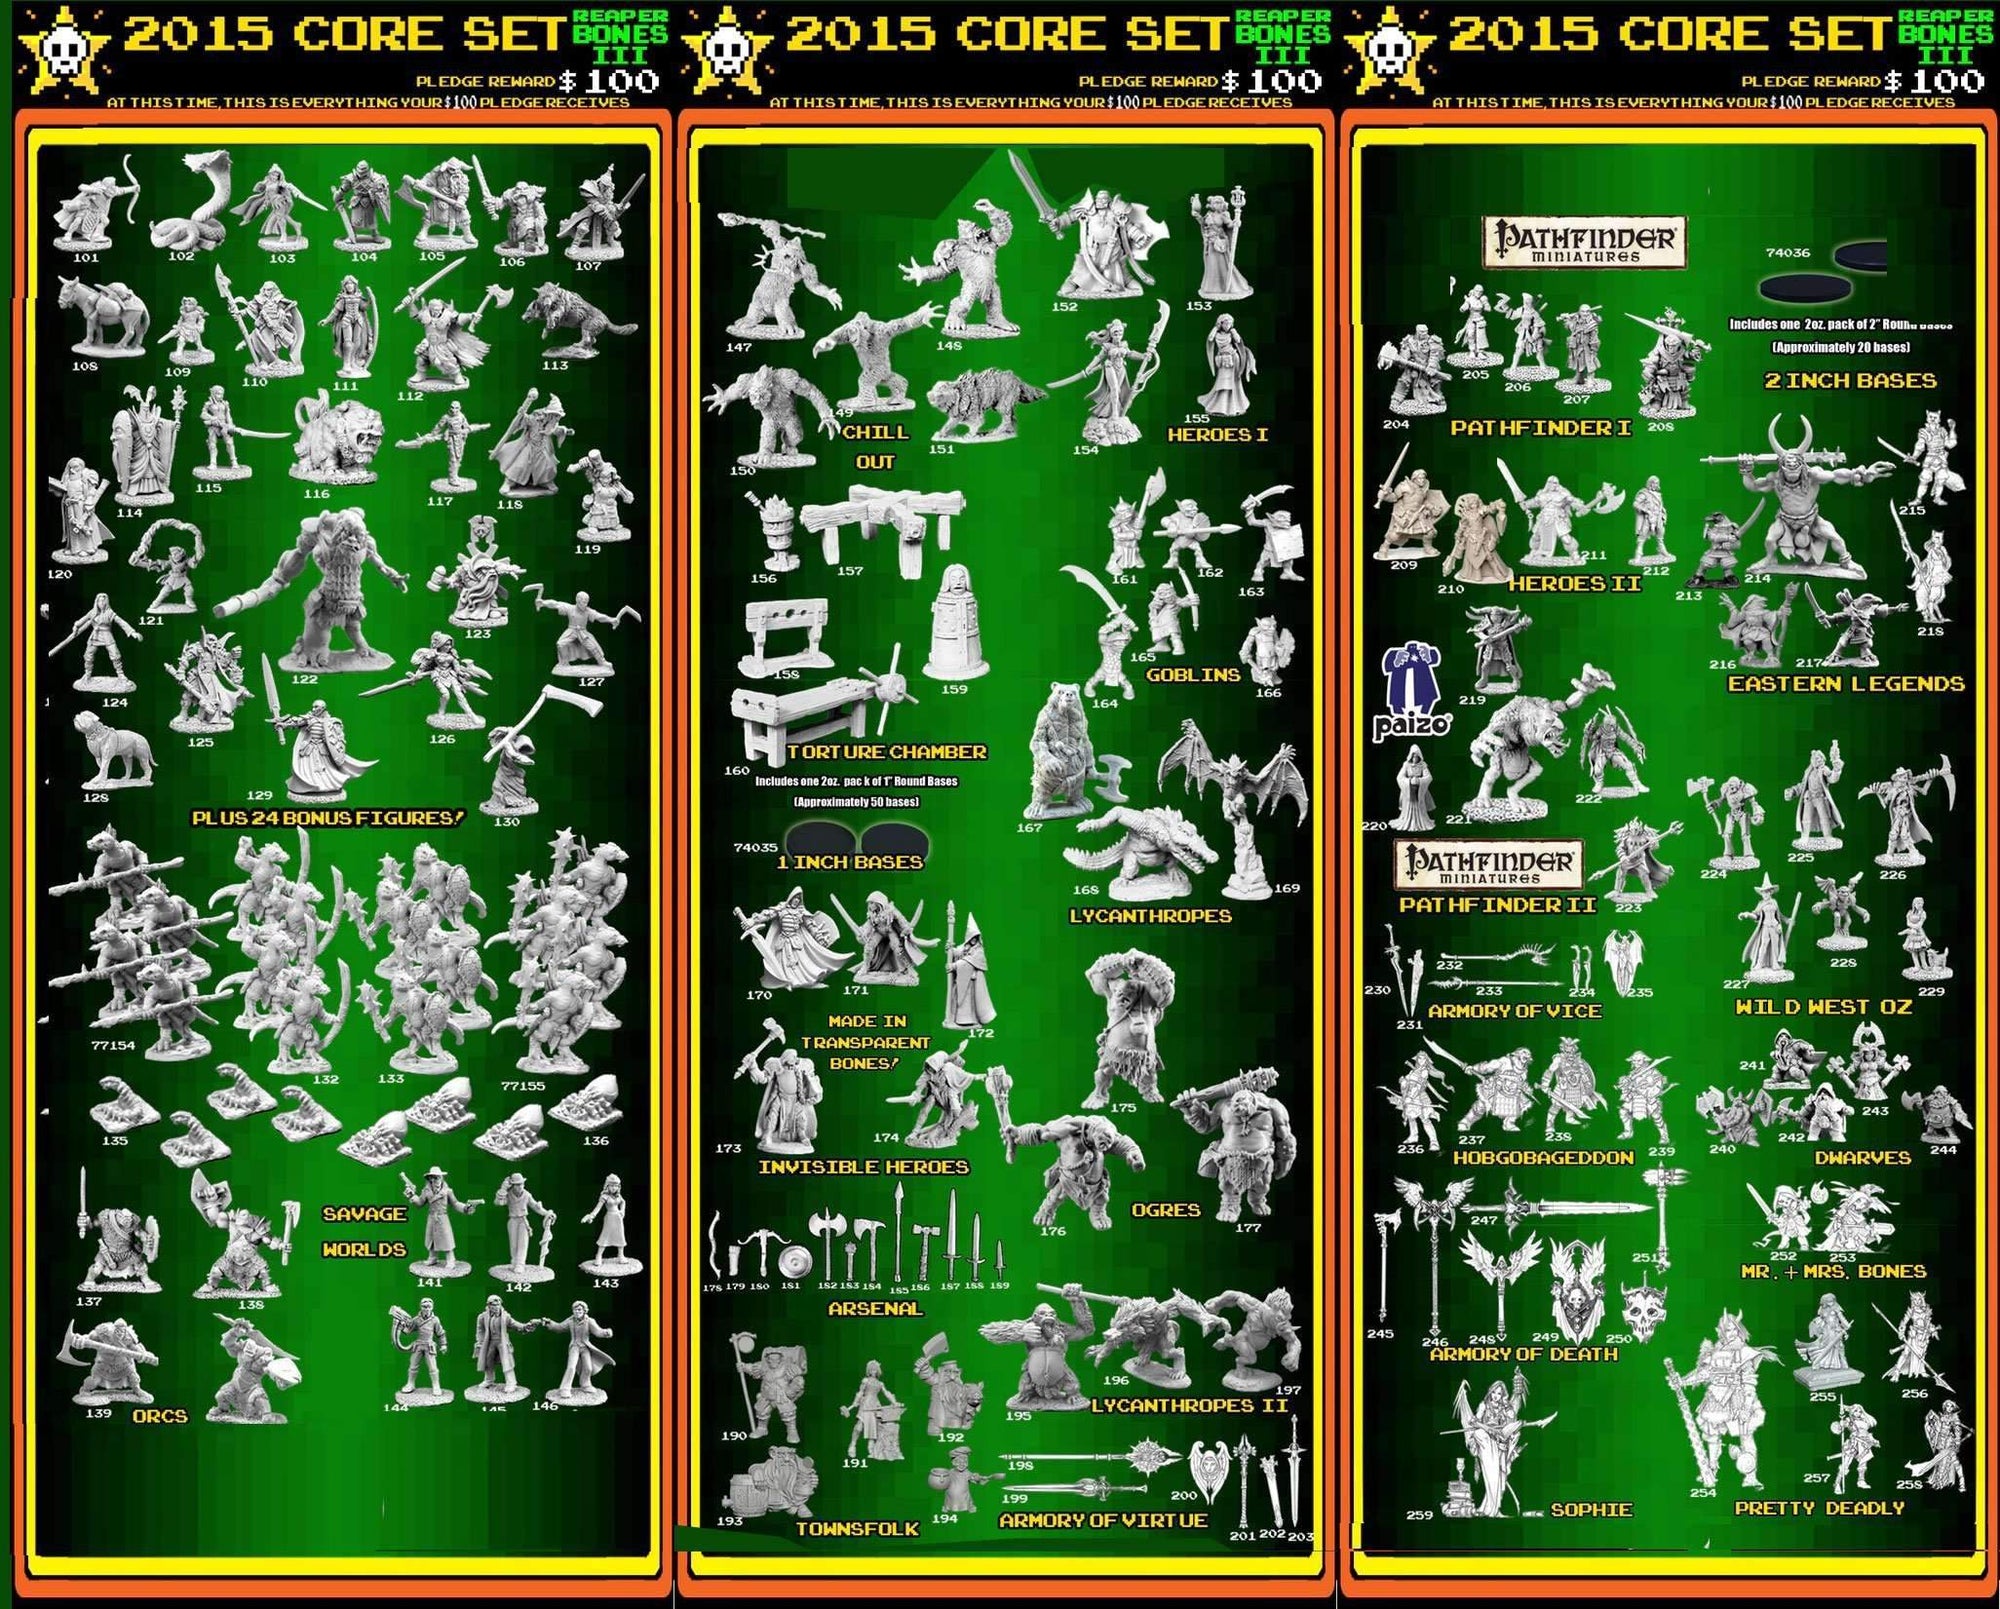 Reaper Miniatures Bones 3: La recherche de M. Bones! (Kickstarter Special) Accessoire de jeu de société Kickstarter Game Steward